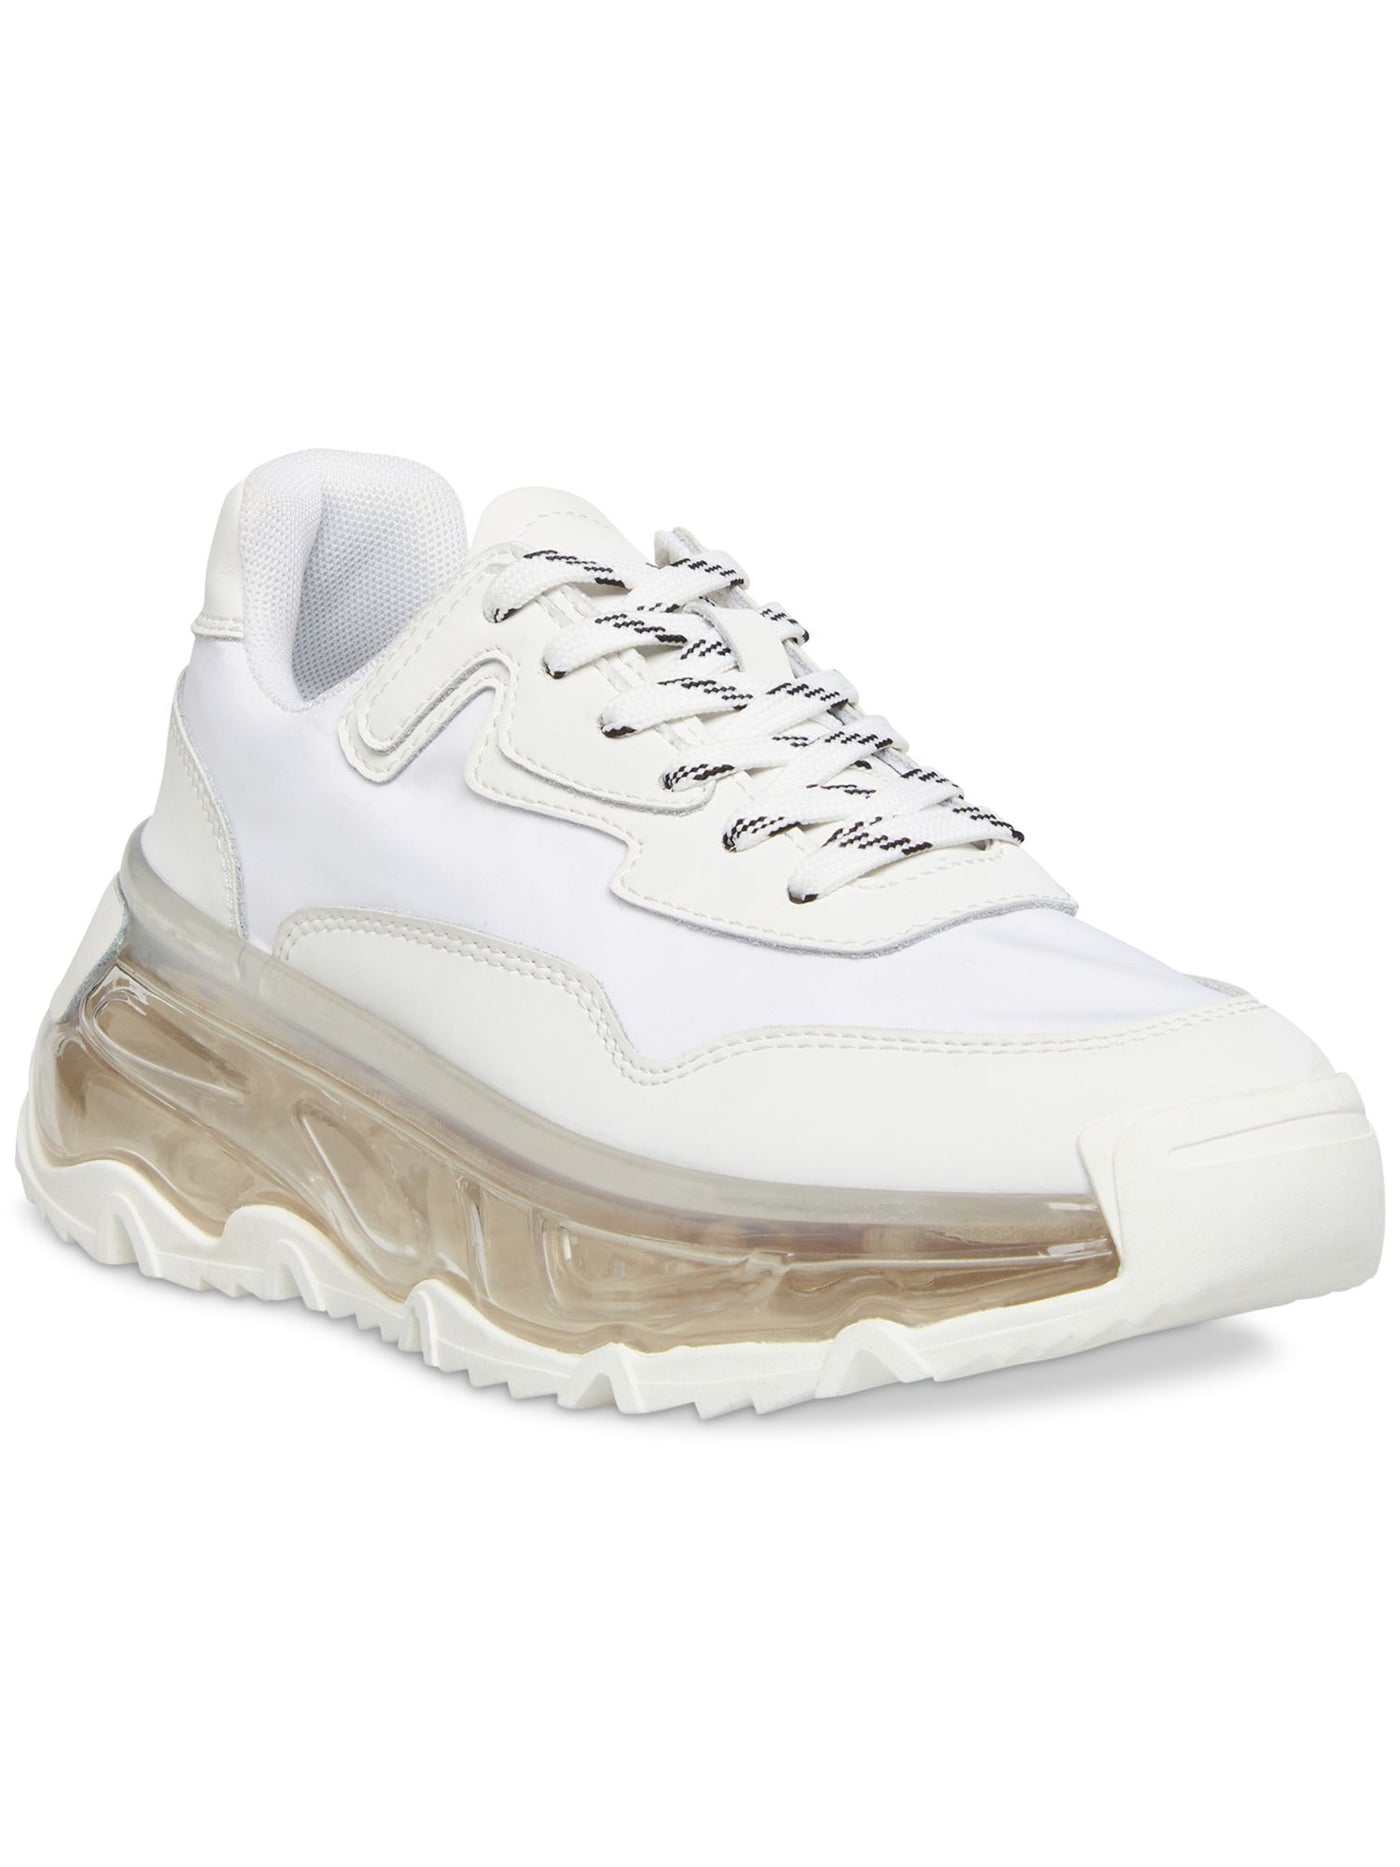 STEVE MADDEN Womens White 1" Platform Comfort Blatant Round Toe Wedge Lace-Up Leather Athletic Training Shoes 11 M